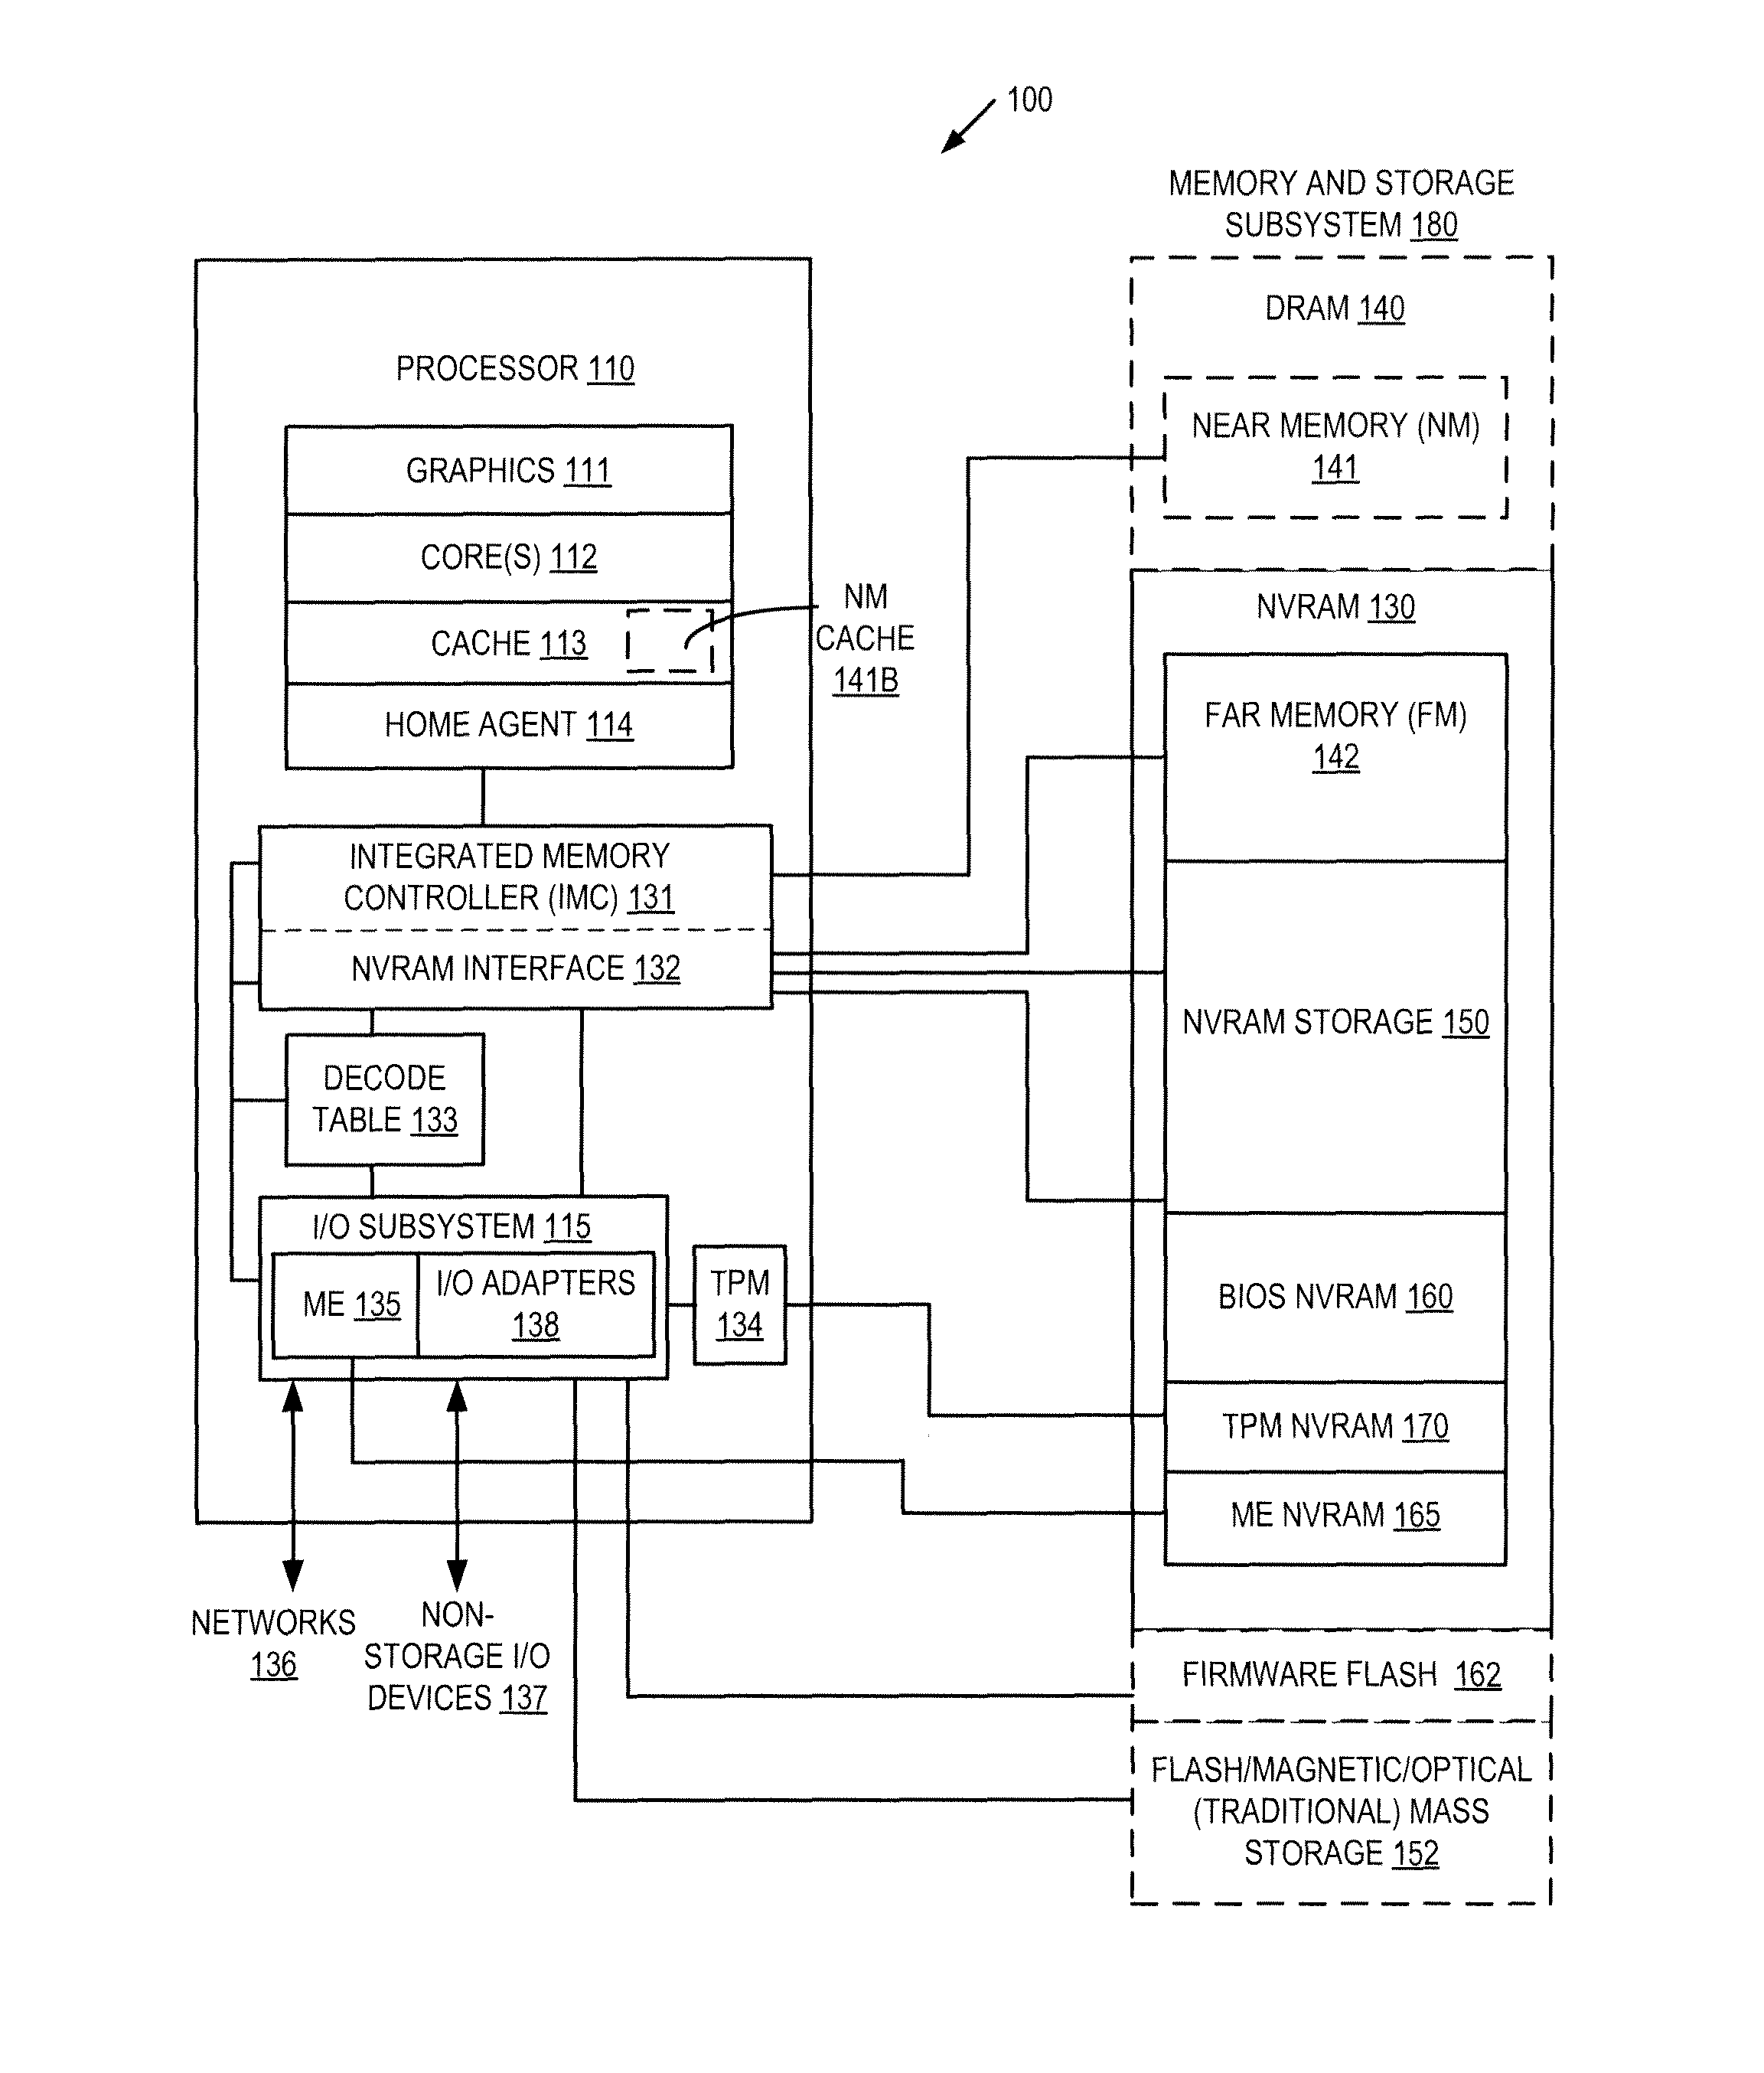 Autonomous initialization of non-volatile random access memory in a computer system